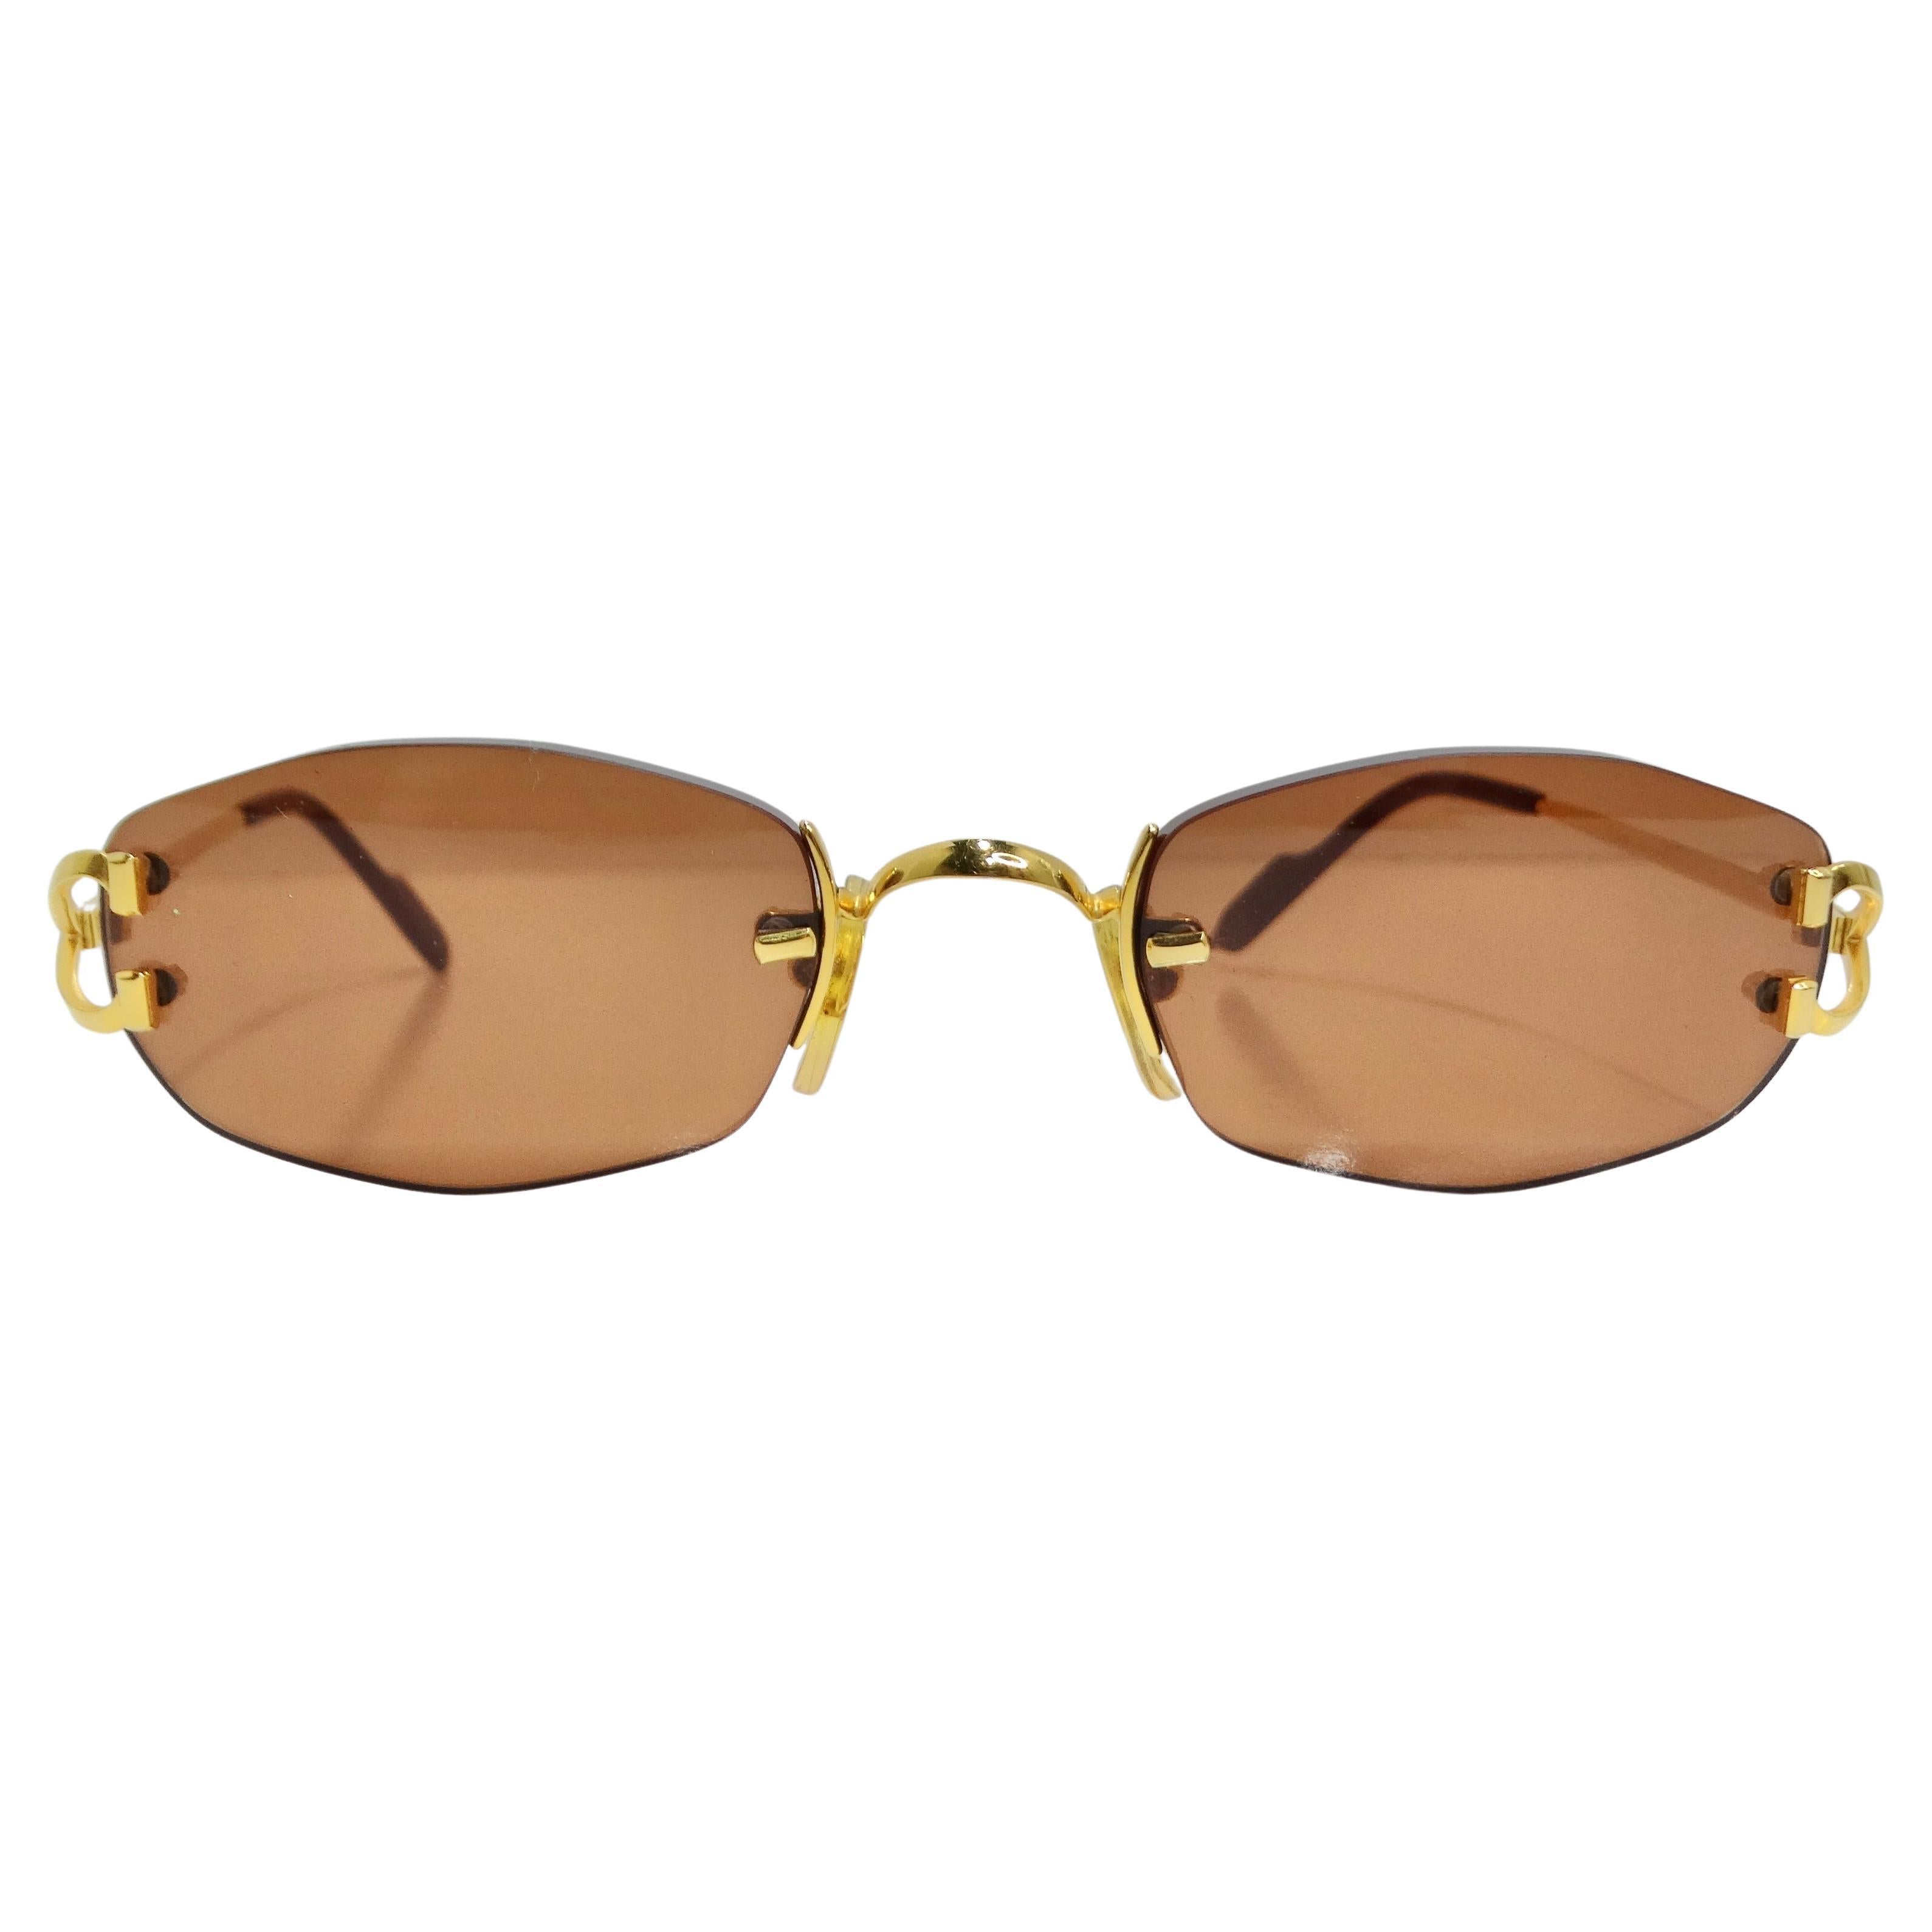 Cartier 1990er Jahre Goldfarbene Capri-Sonnenbrille